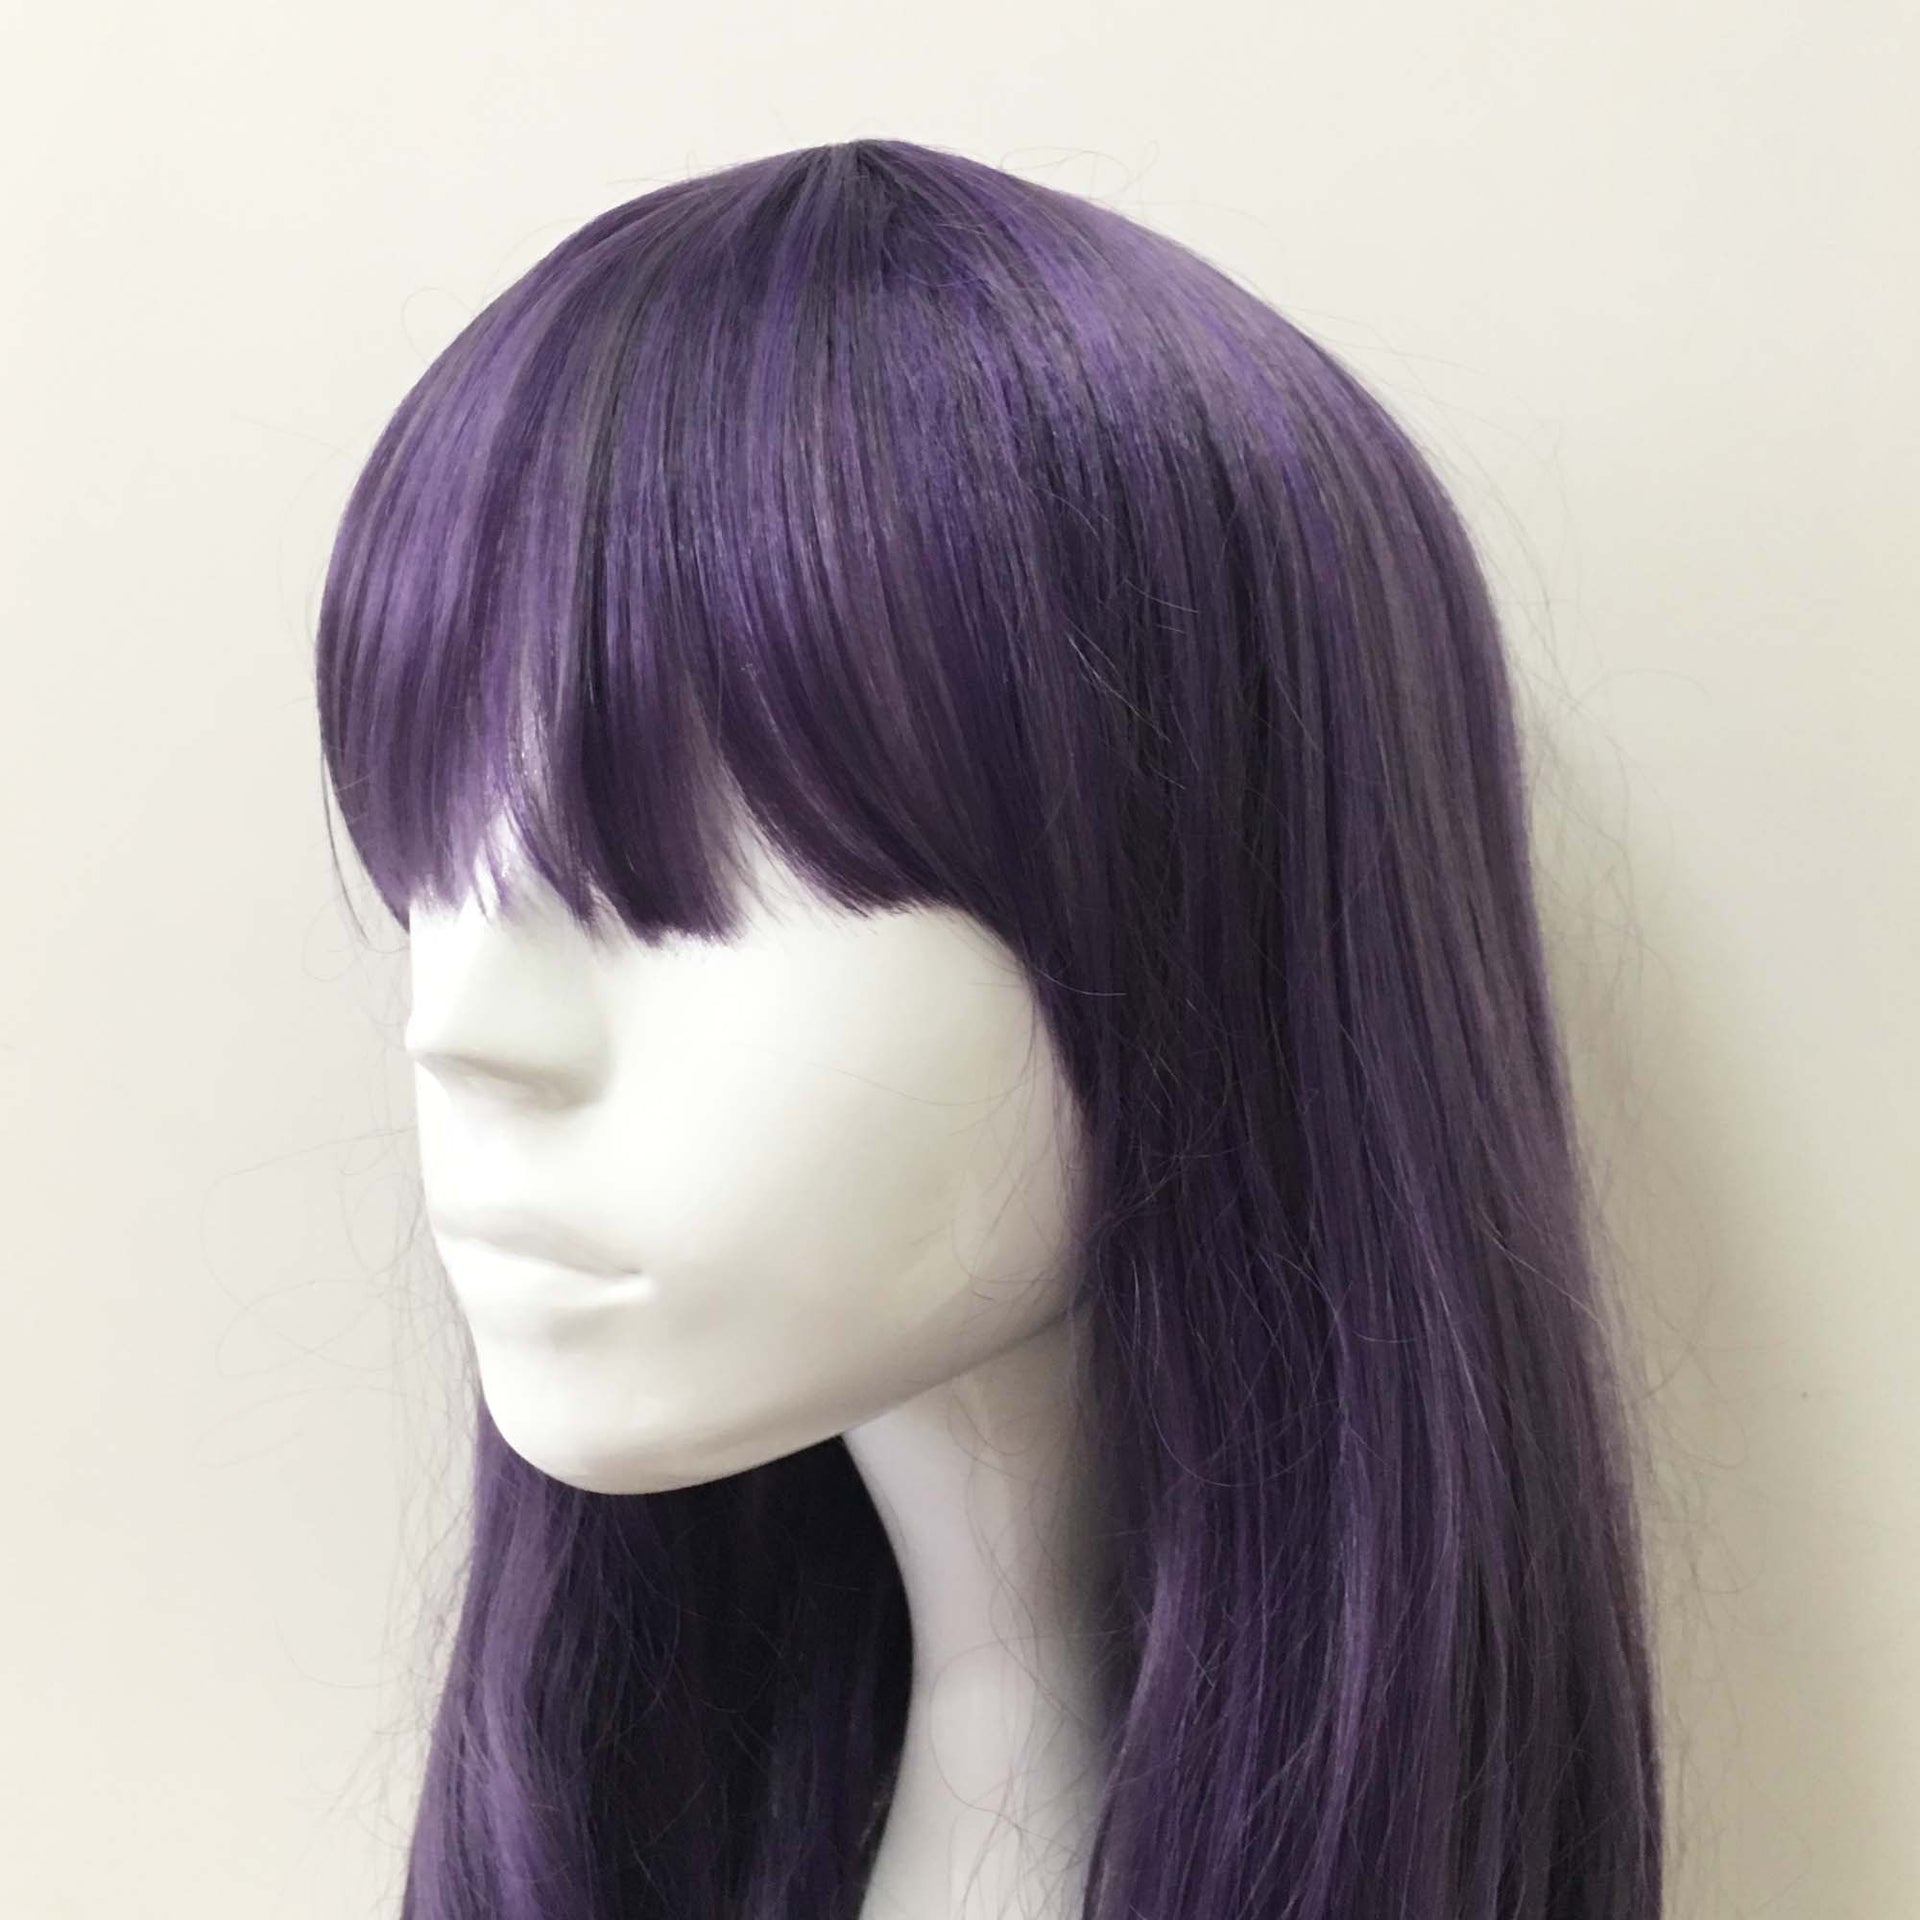 nevermindyrhead Women Purple Long Curly Blunt Bangs Cosplay Wig